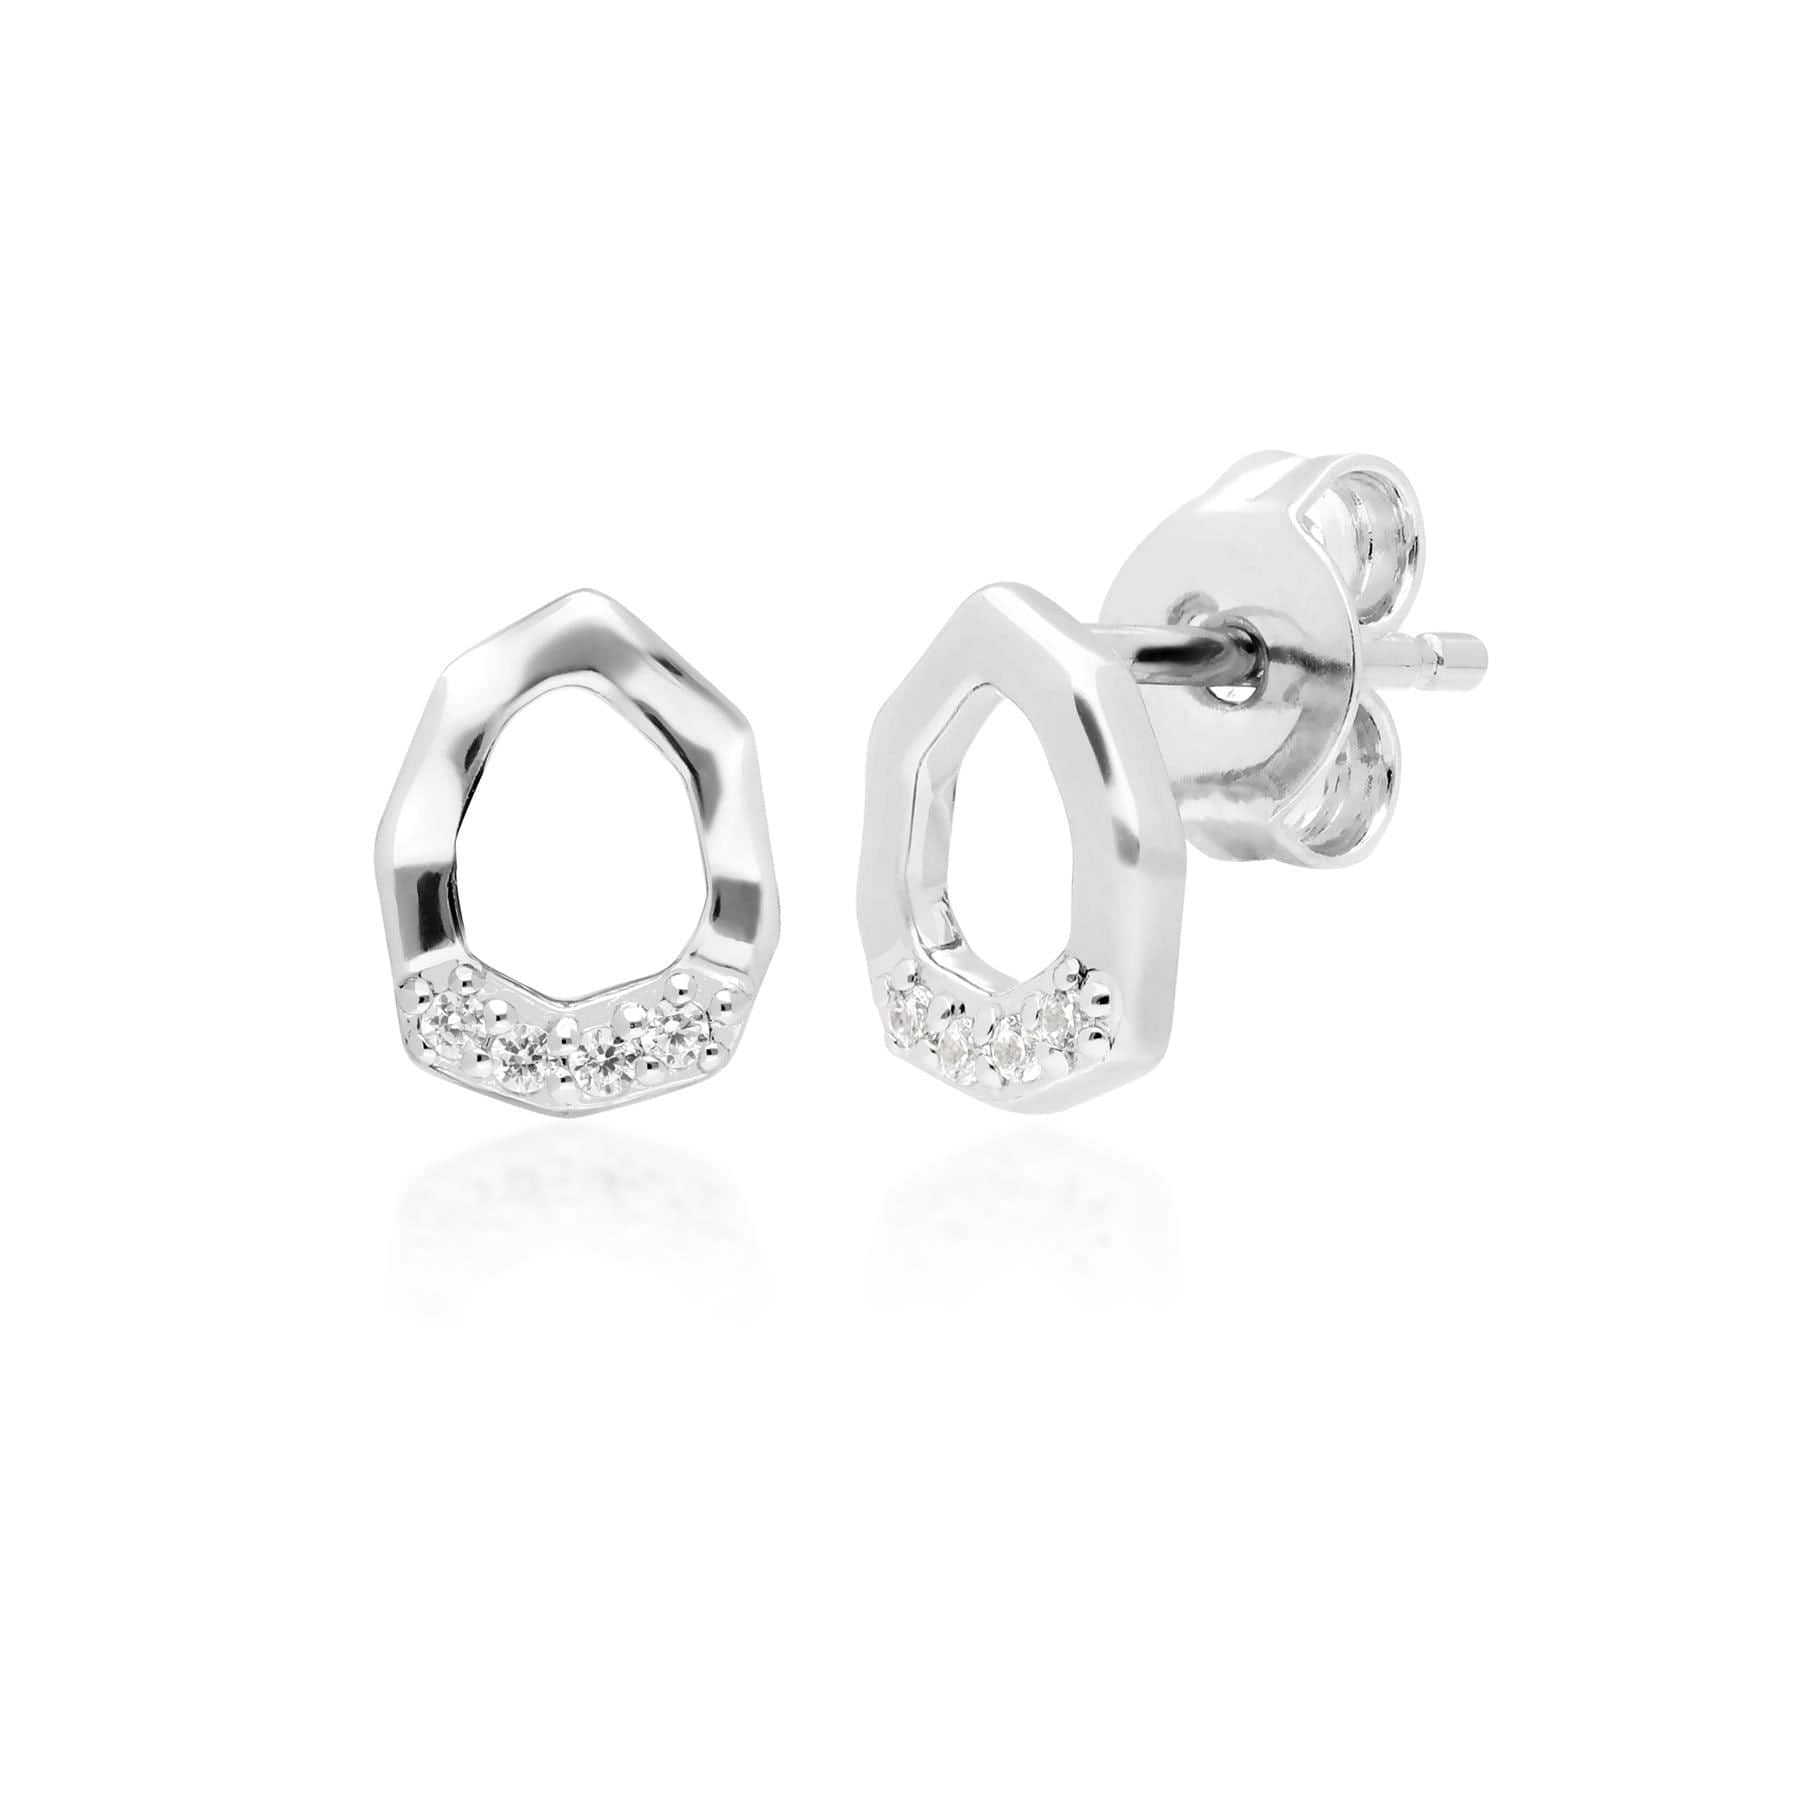 162E0269019-162R0391019 Diamond Pave Asymmetrical Stud Earring & Ring Set in 9ct White Gold 2